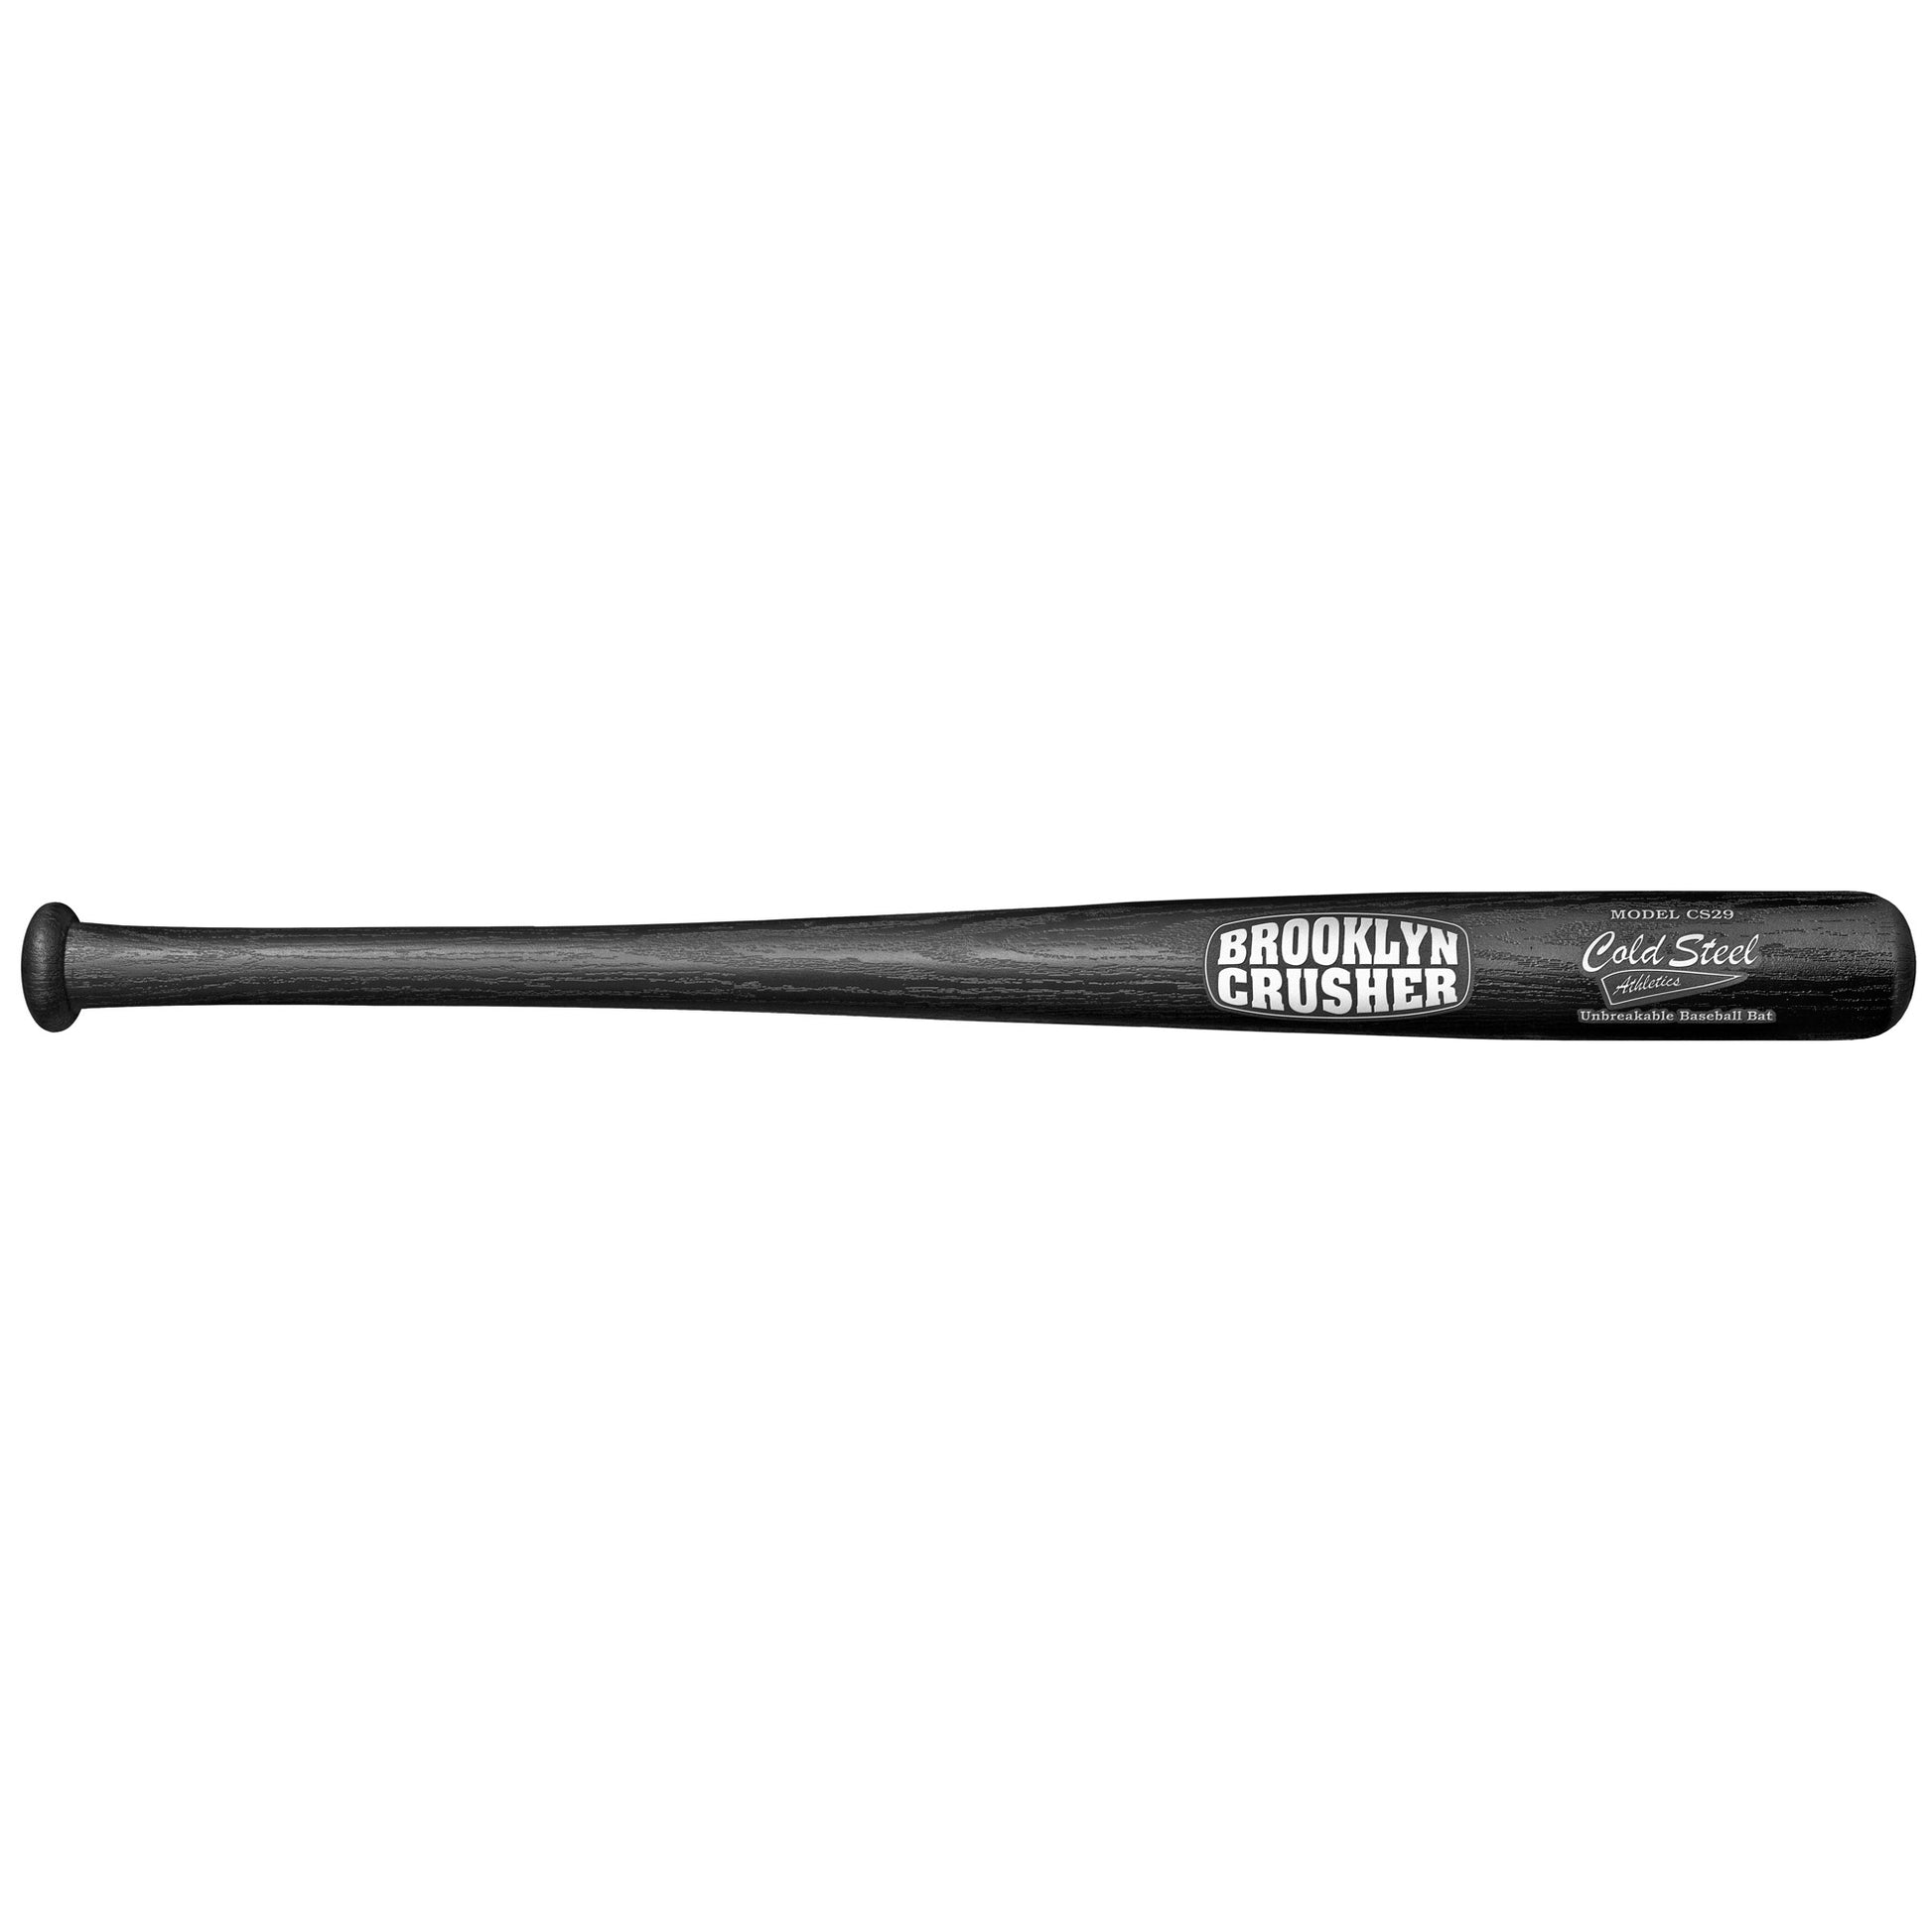 Cold Steel Brooklyn Crusher Tool Black Bat 29 Length Polypropylene CS-92BSS - California Shooting Supplies